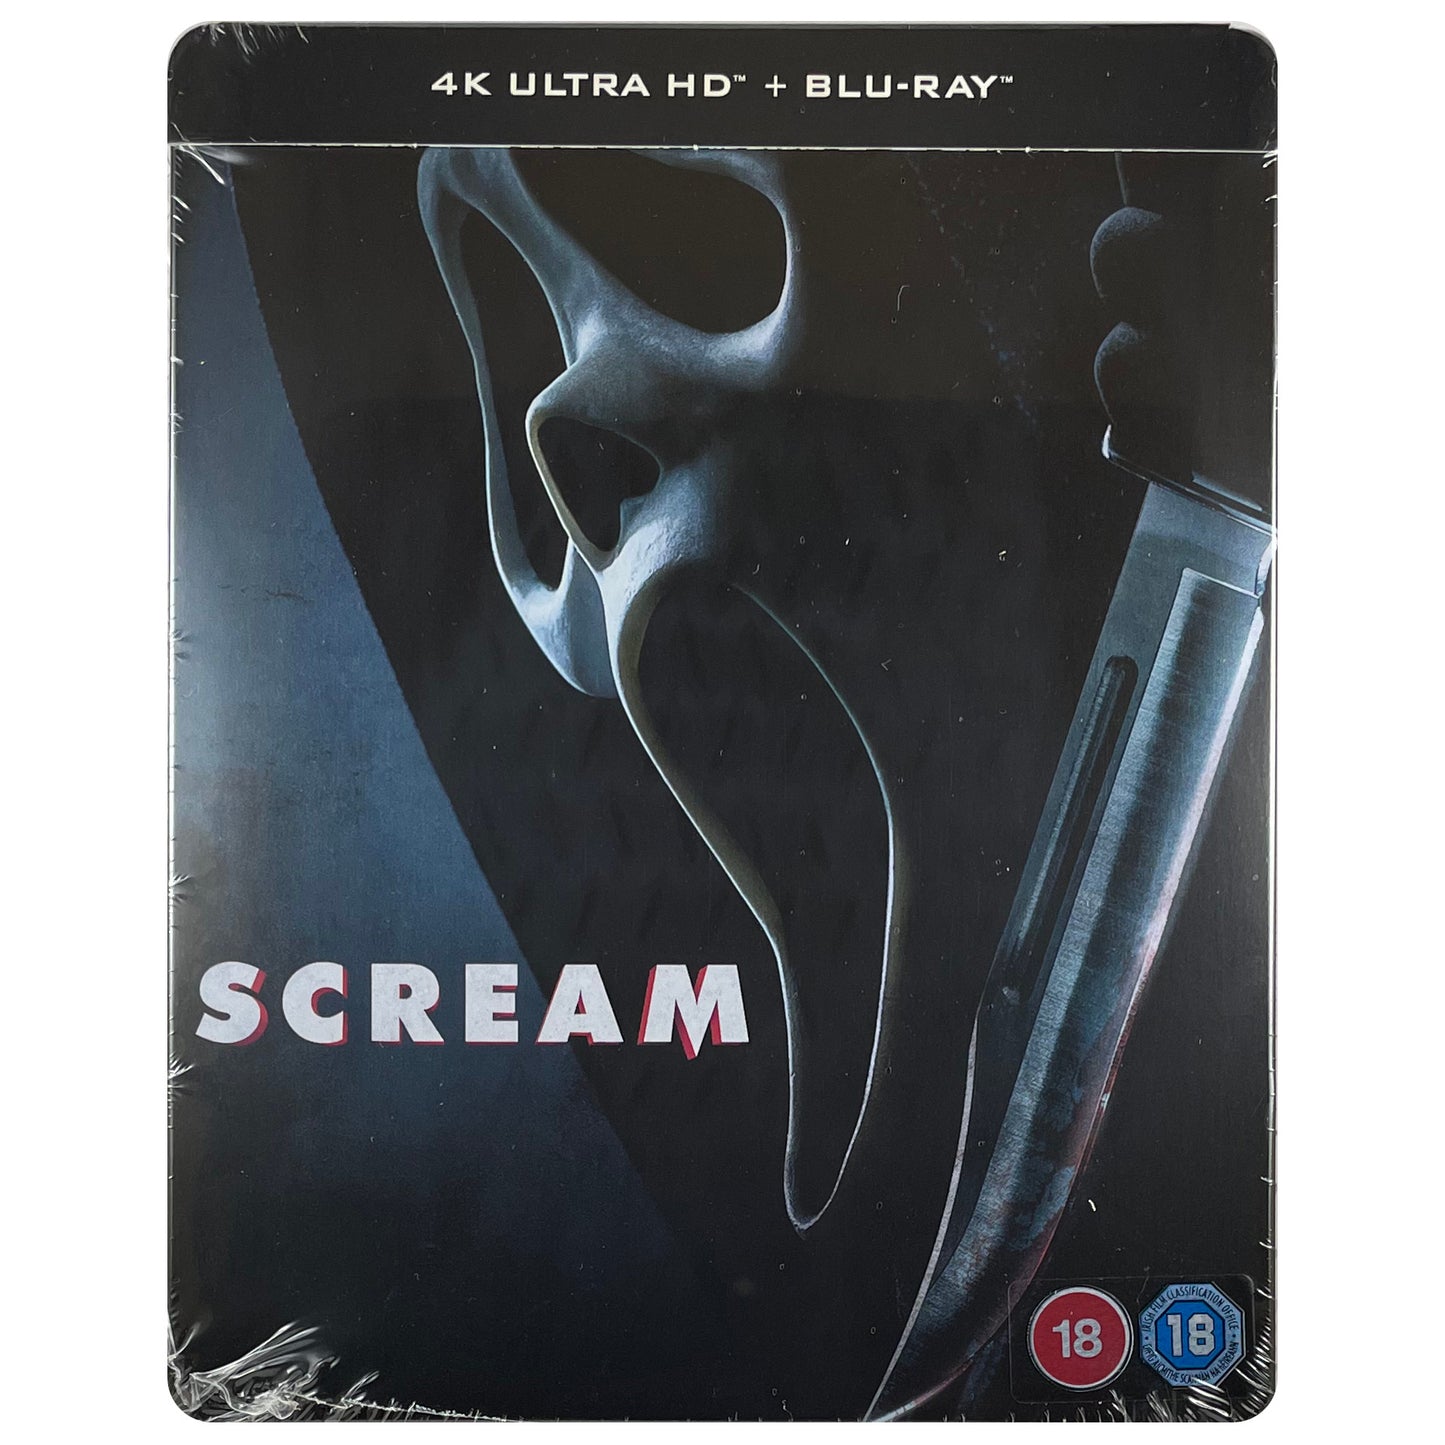 Scream (2022) 4K Steelbook